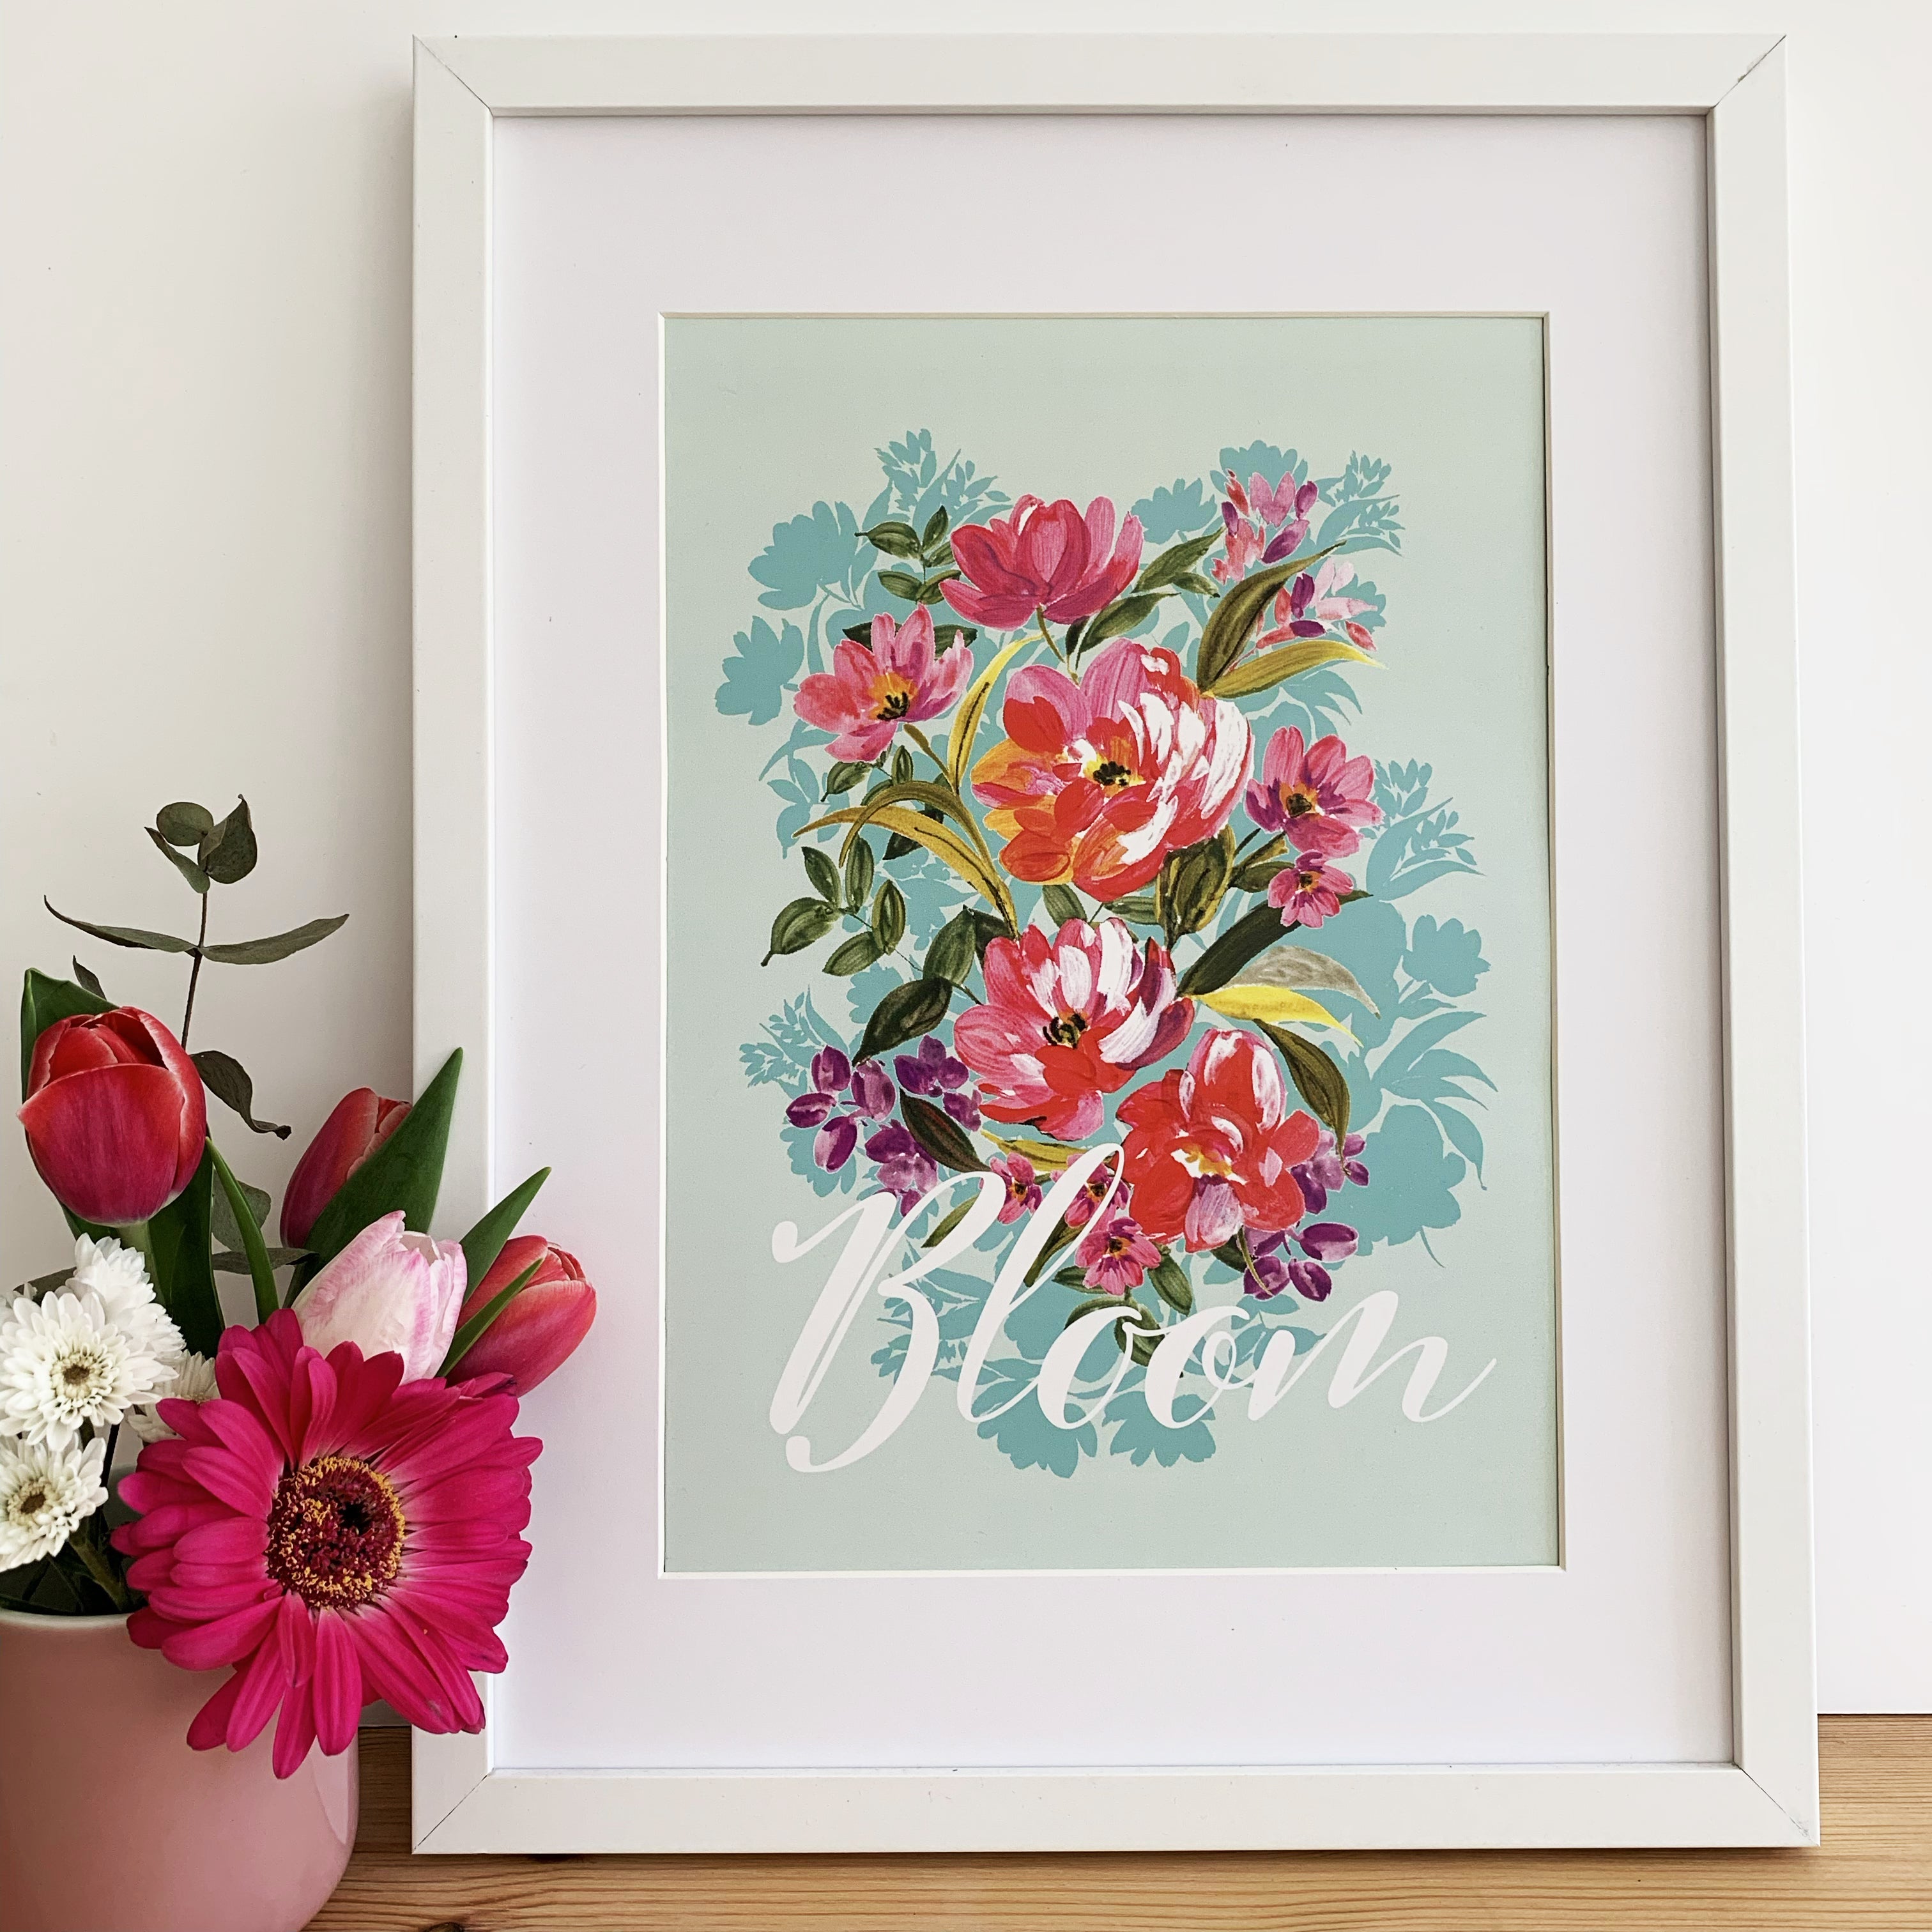 REDUCED** A4 BLOOM Floral art print. FREE Uk postage.